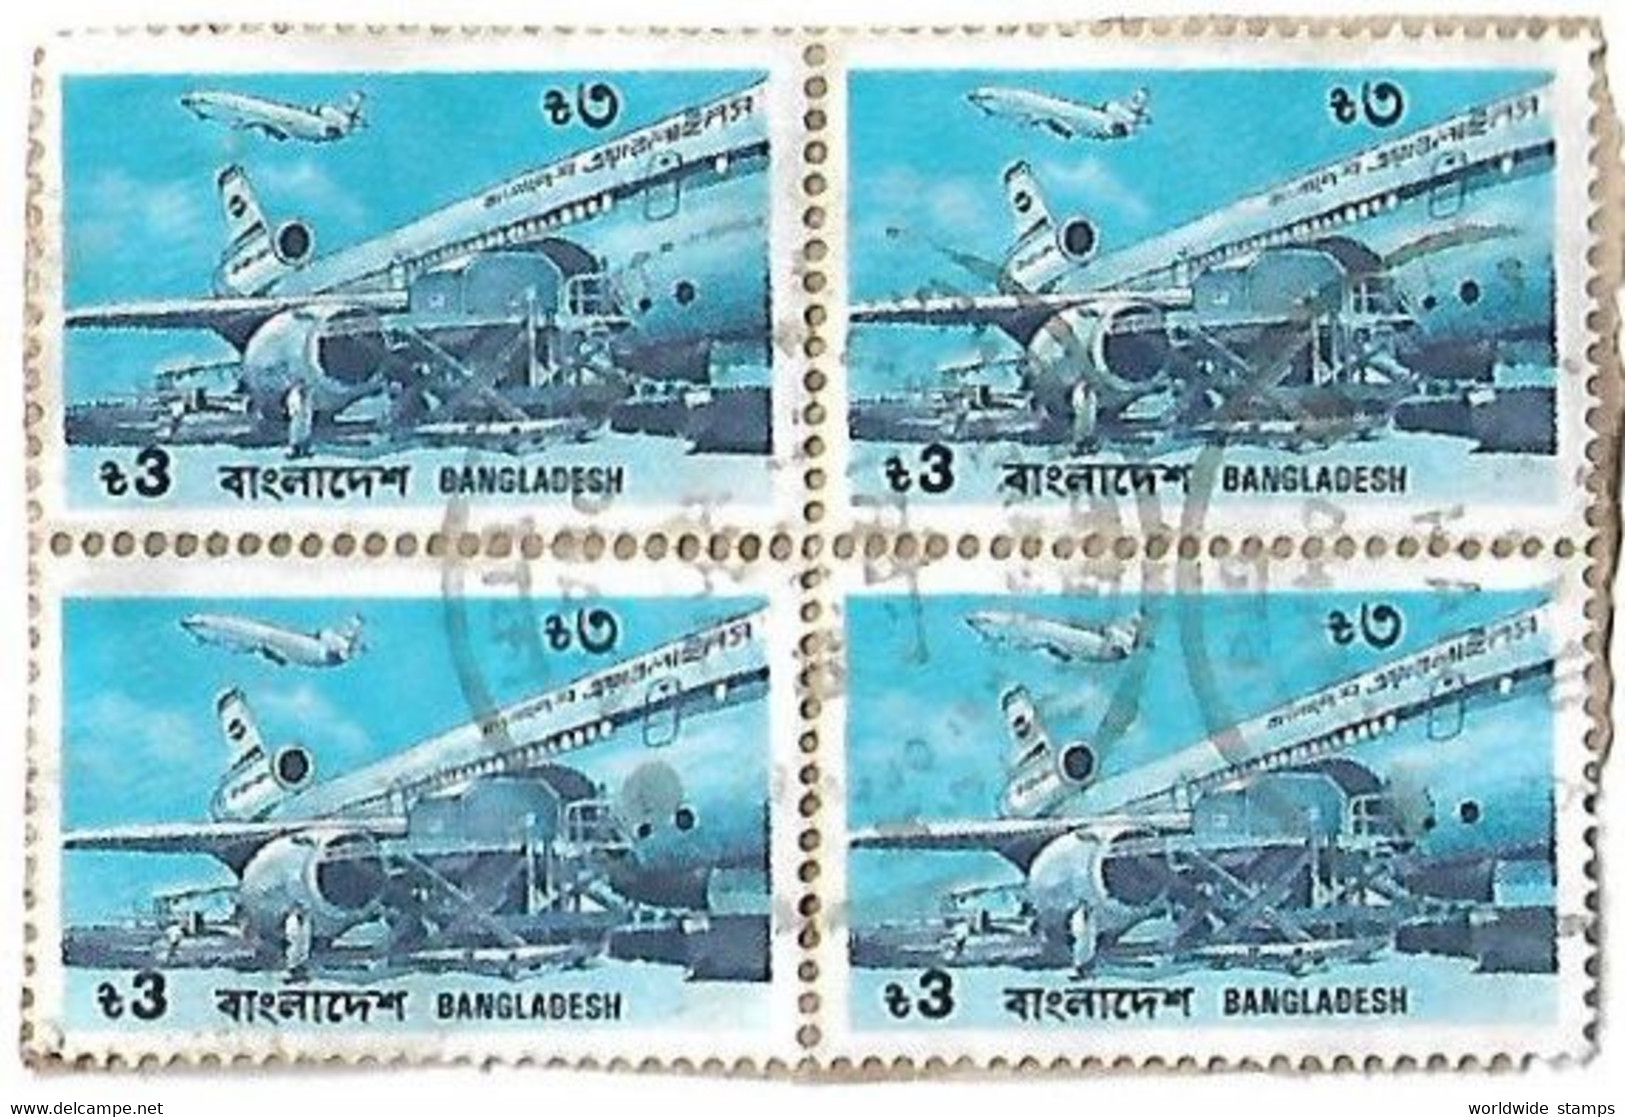 Bangladesh 1989  Bangladesh Airport Block Of 4 Used Stamps - Bangladesh